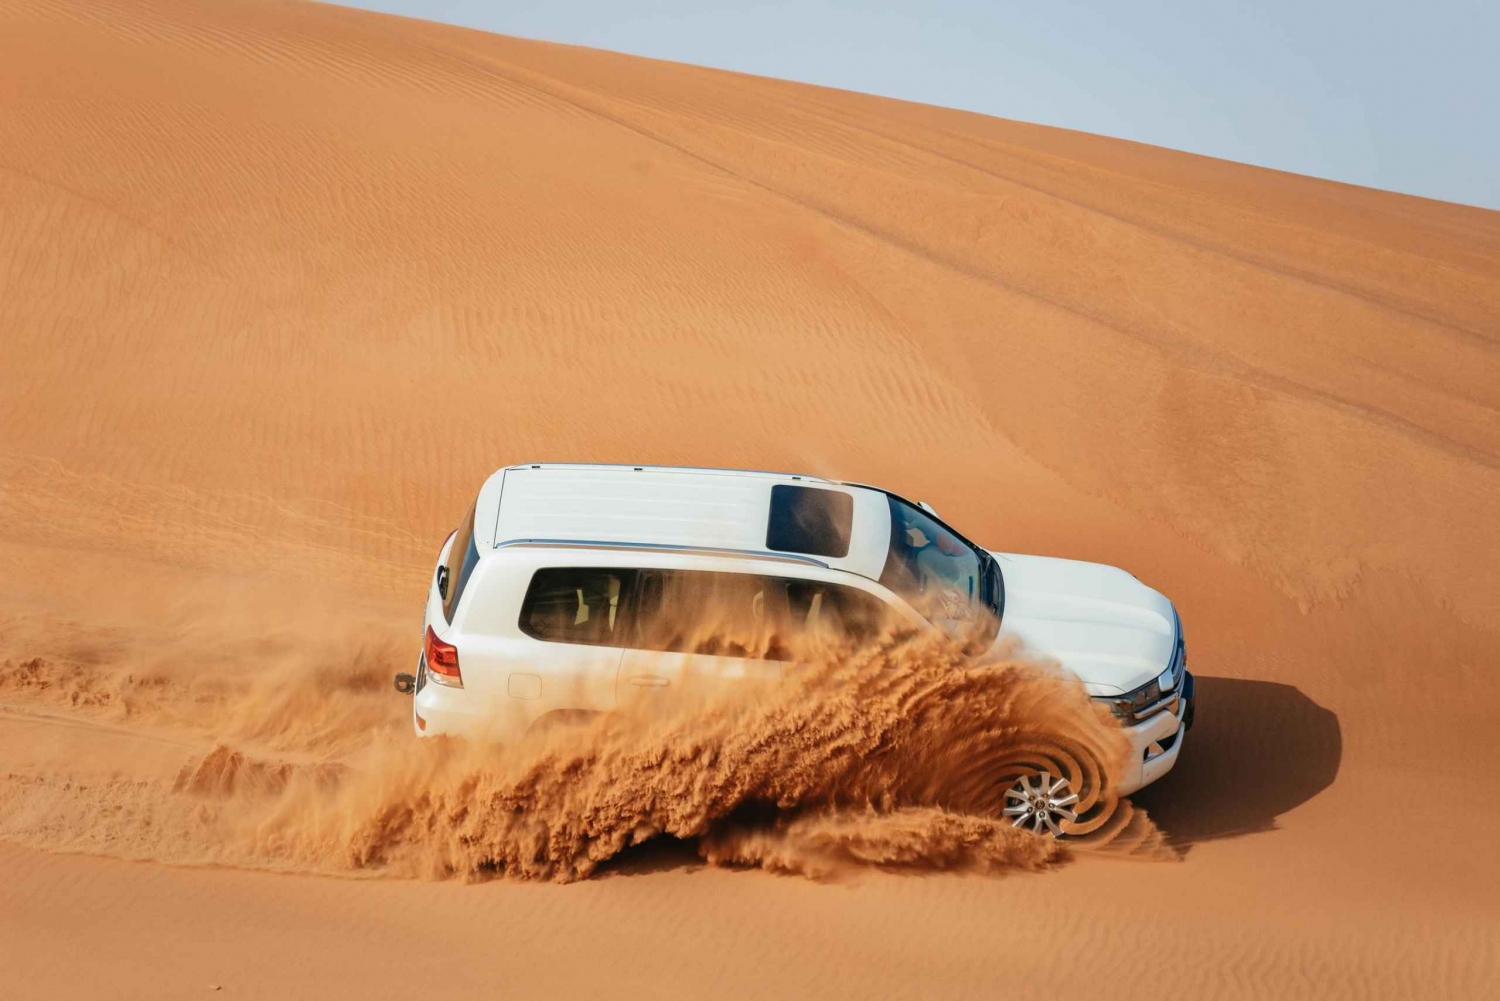 Dubai: Extreme Desert Safari, Camel Ride, Show & BBQ Dinner